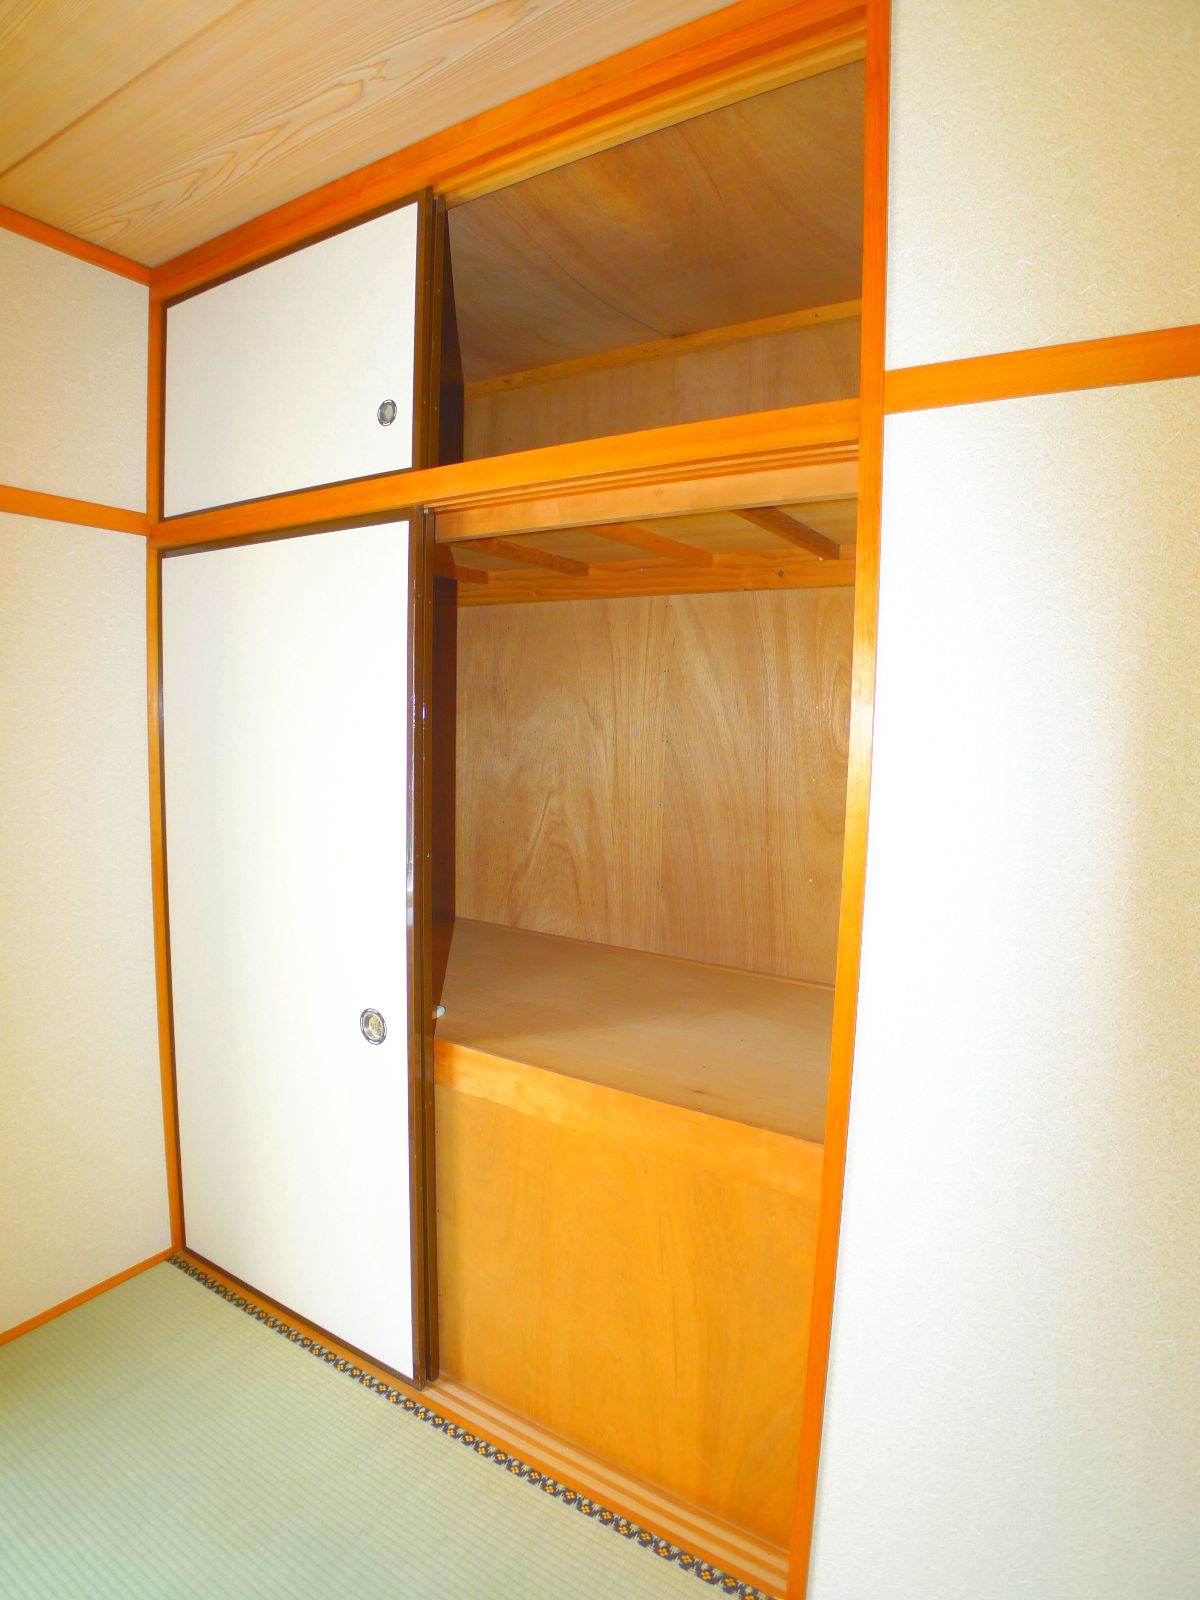 Receipt. Second floor Japanese-style room